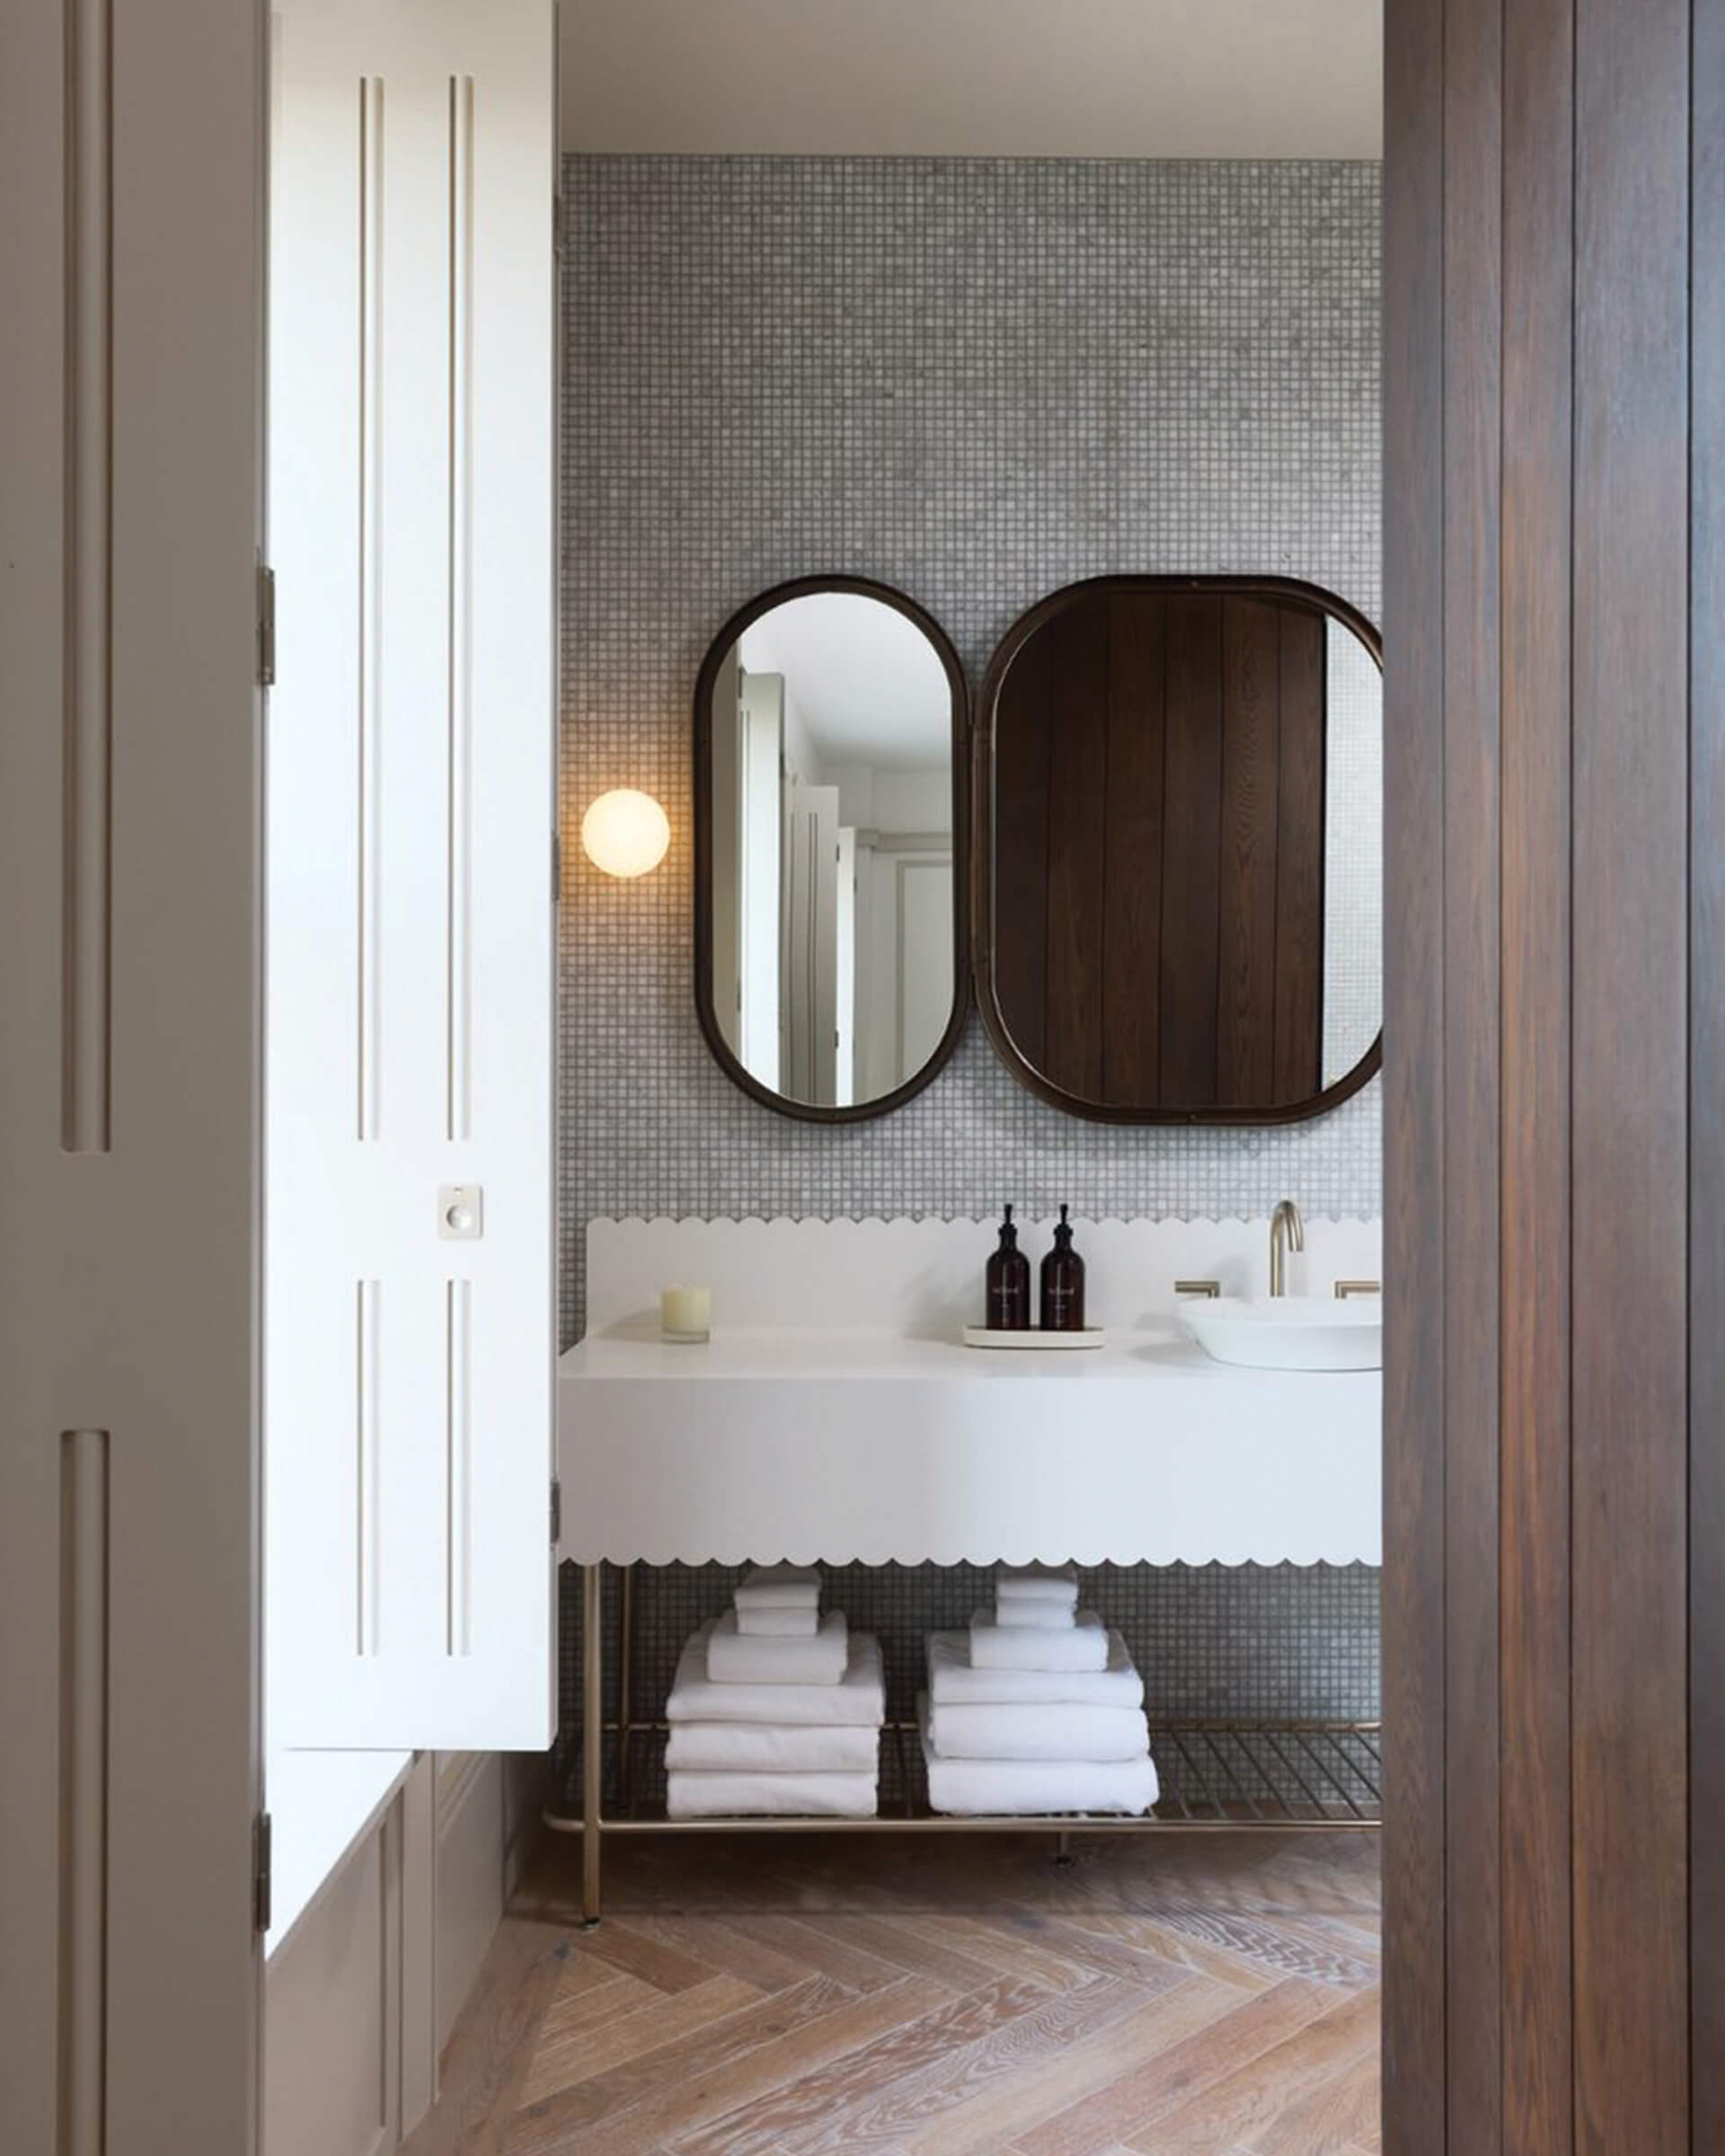 Mirror and bathroom vanity